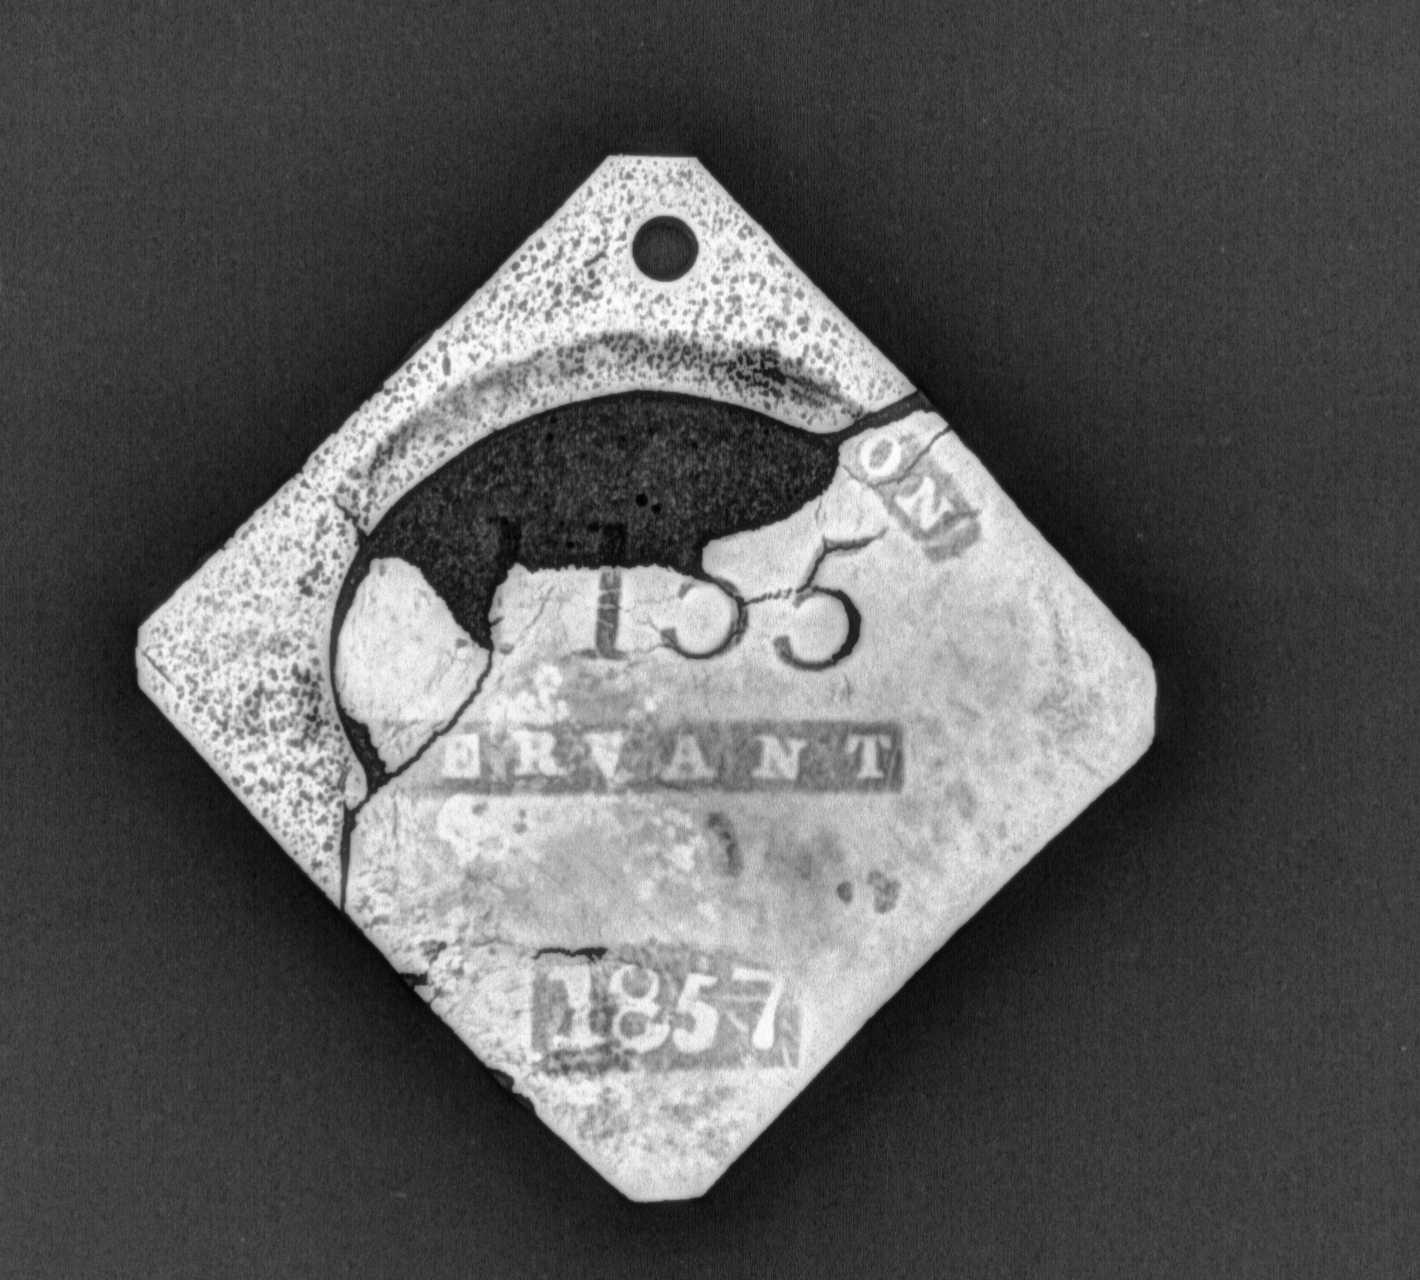 X-radiograph image of slave badge